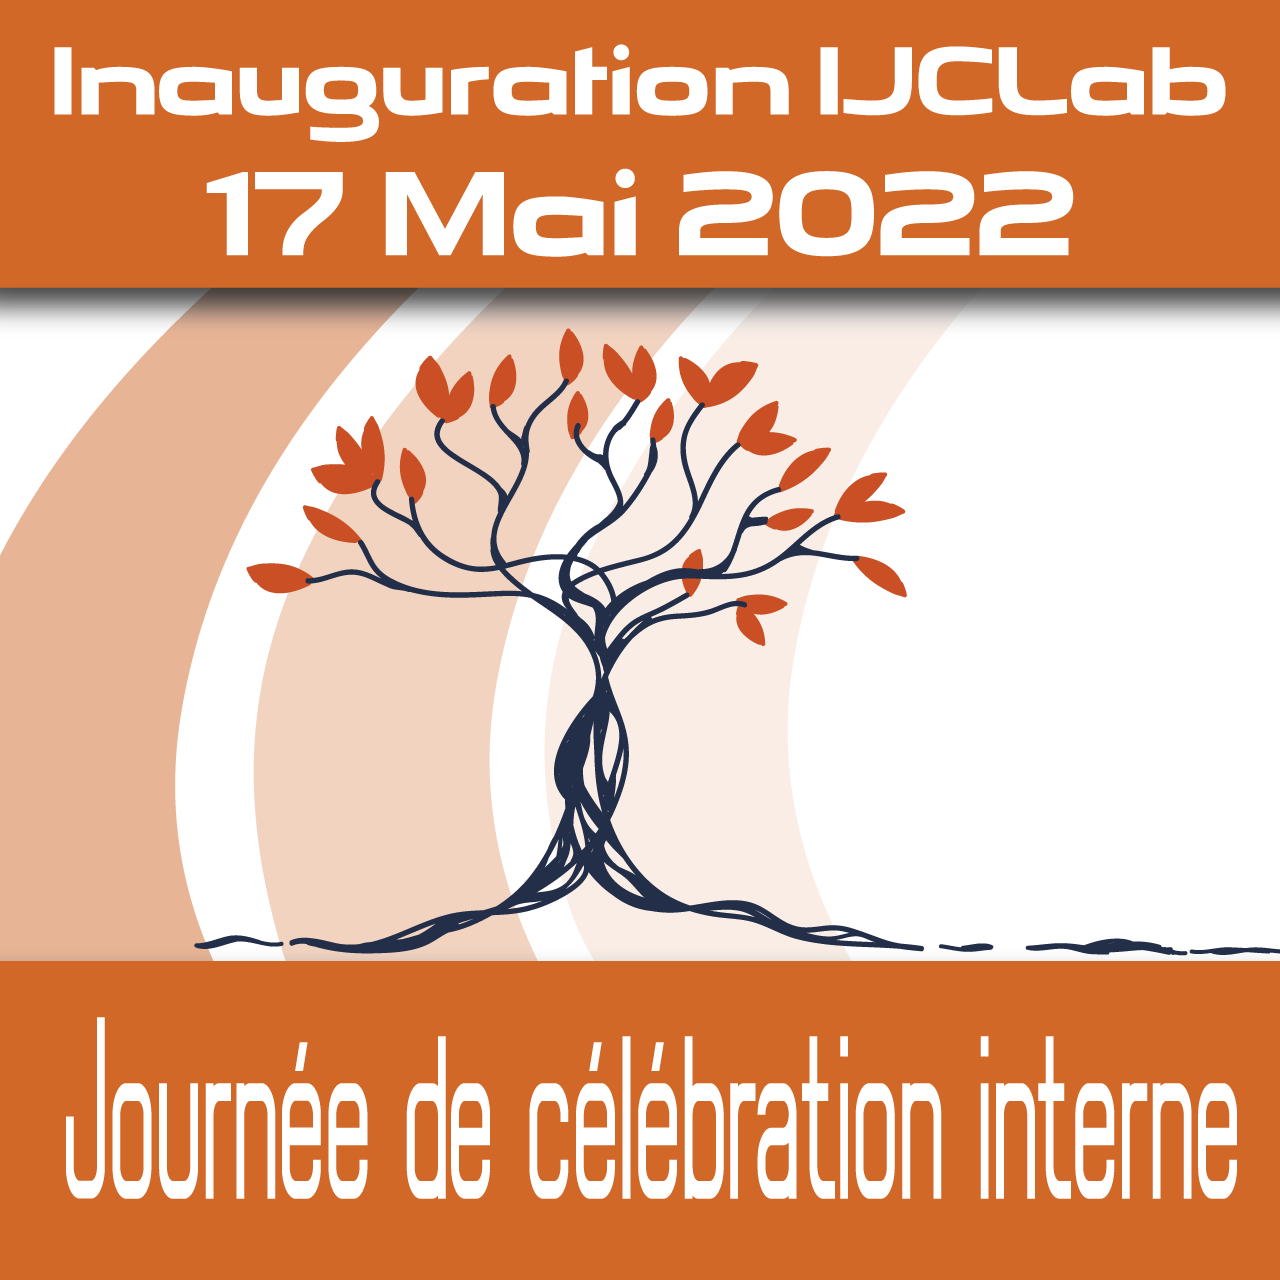 The inauguration of IJCLab: internal celebration day